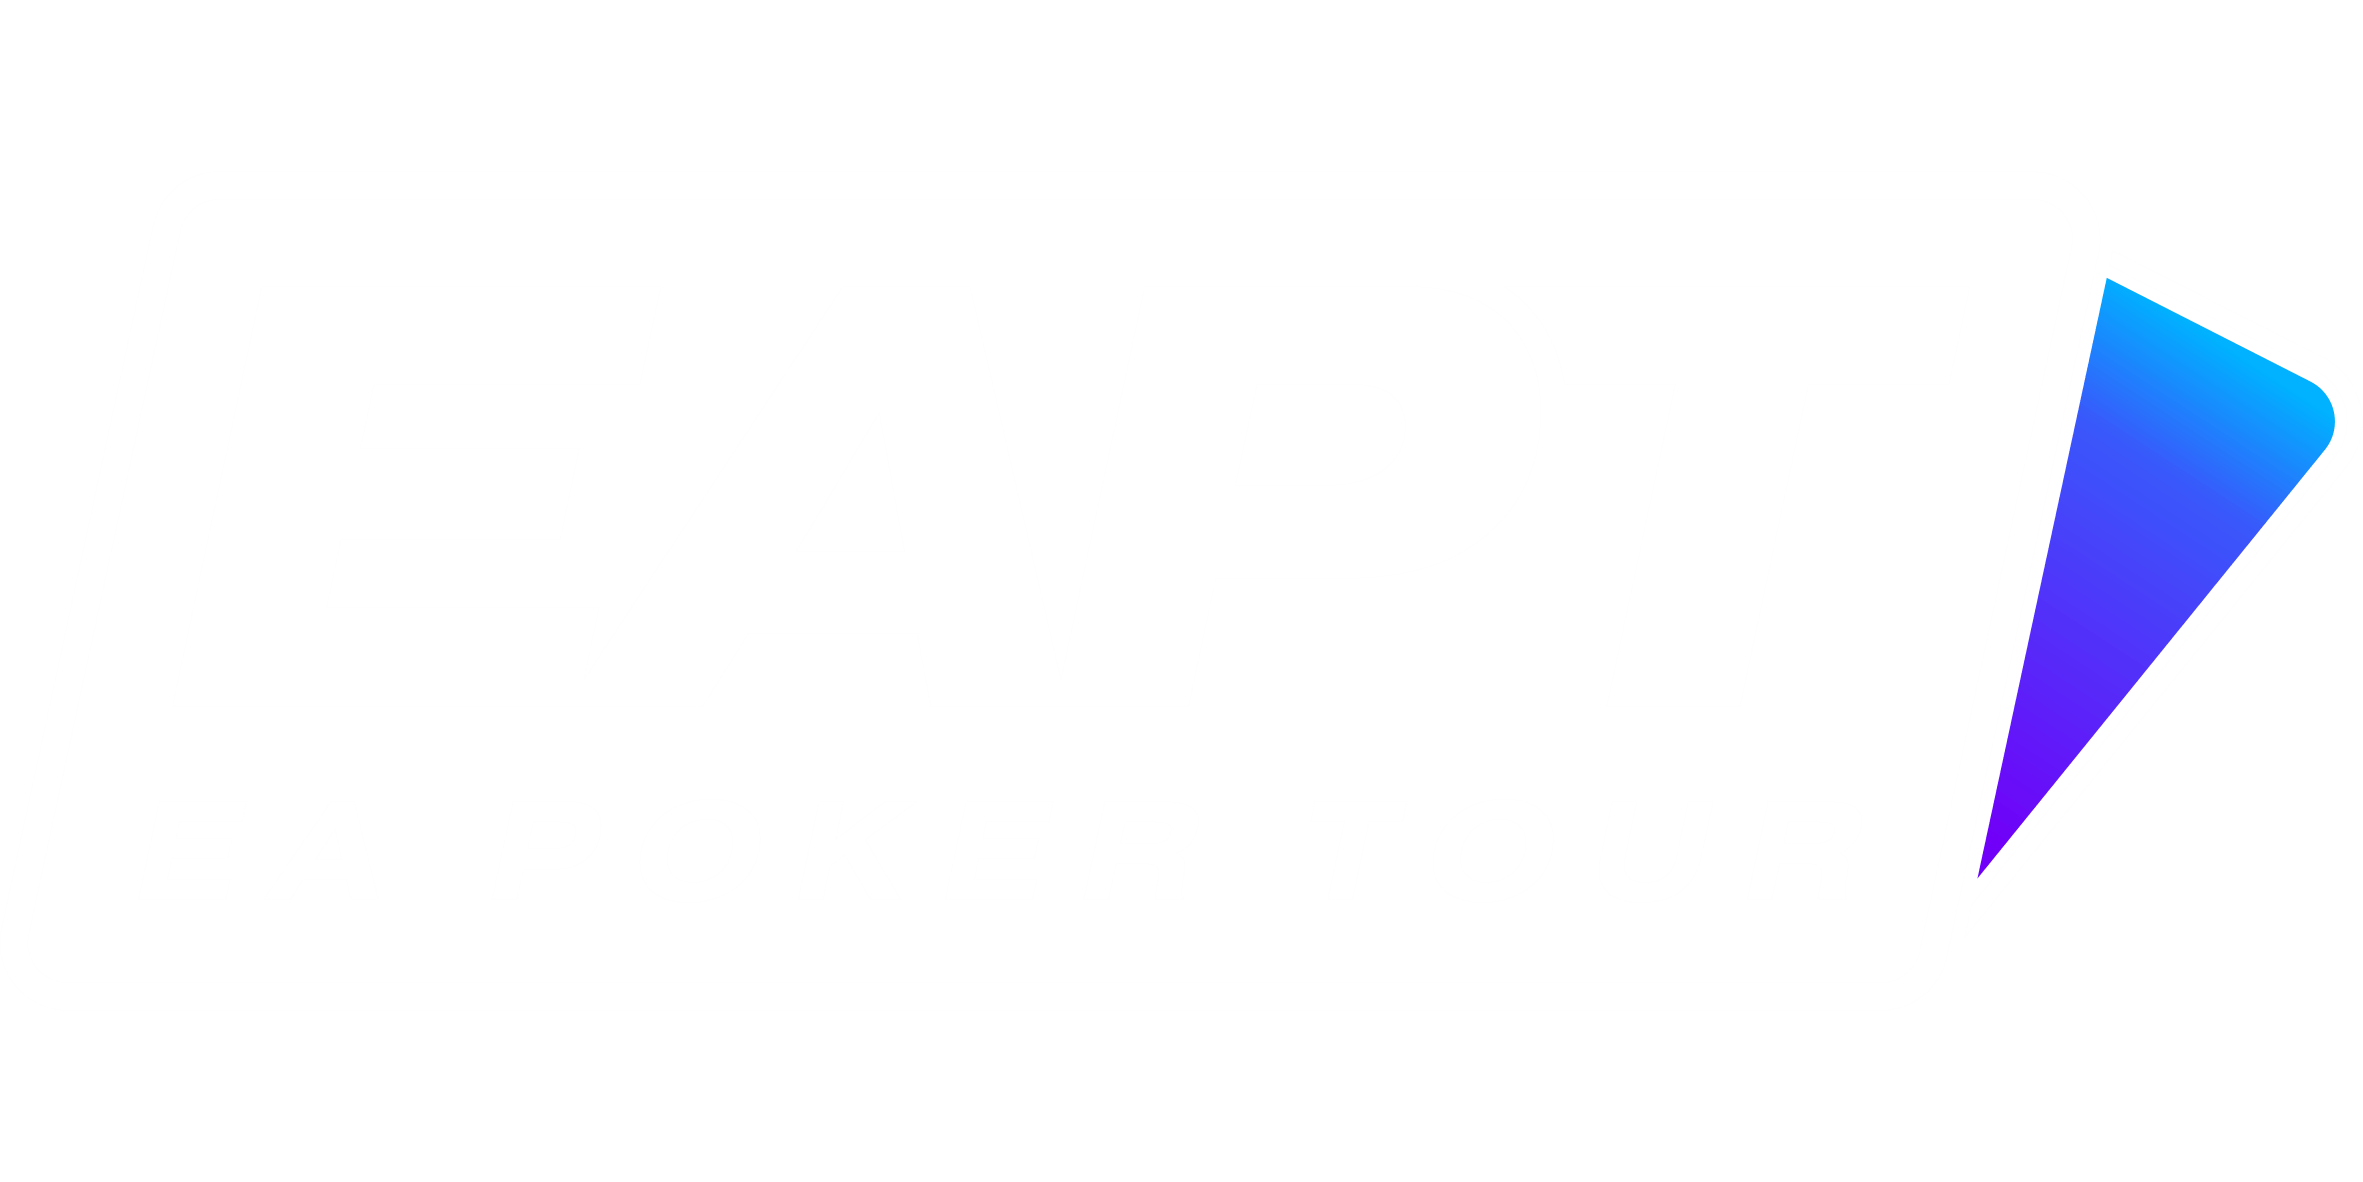 EA Poker Tour